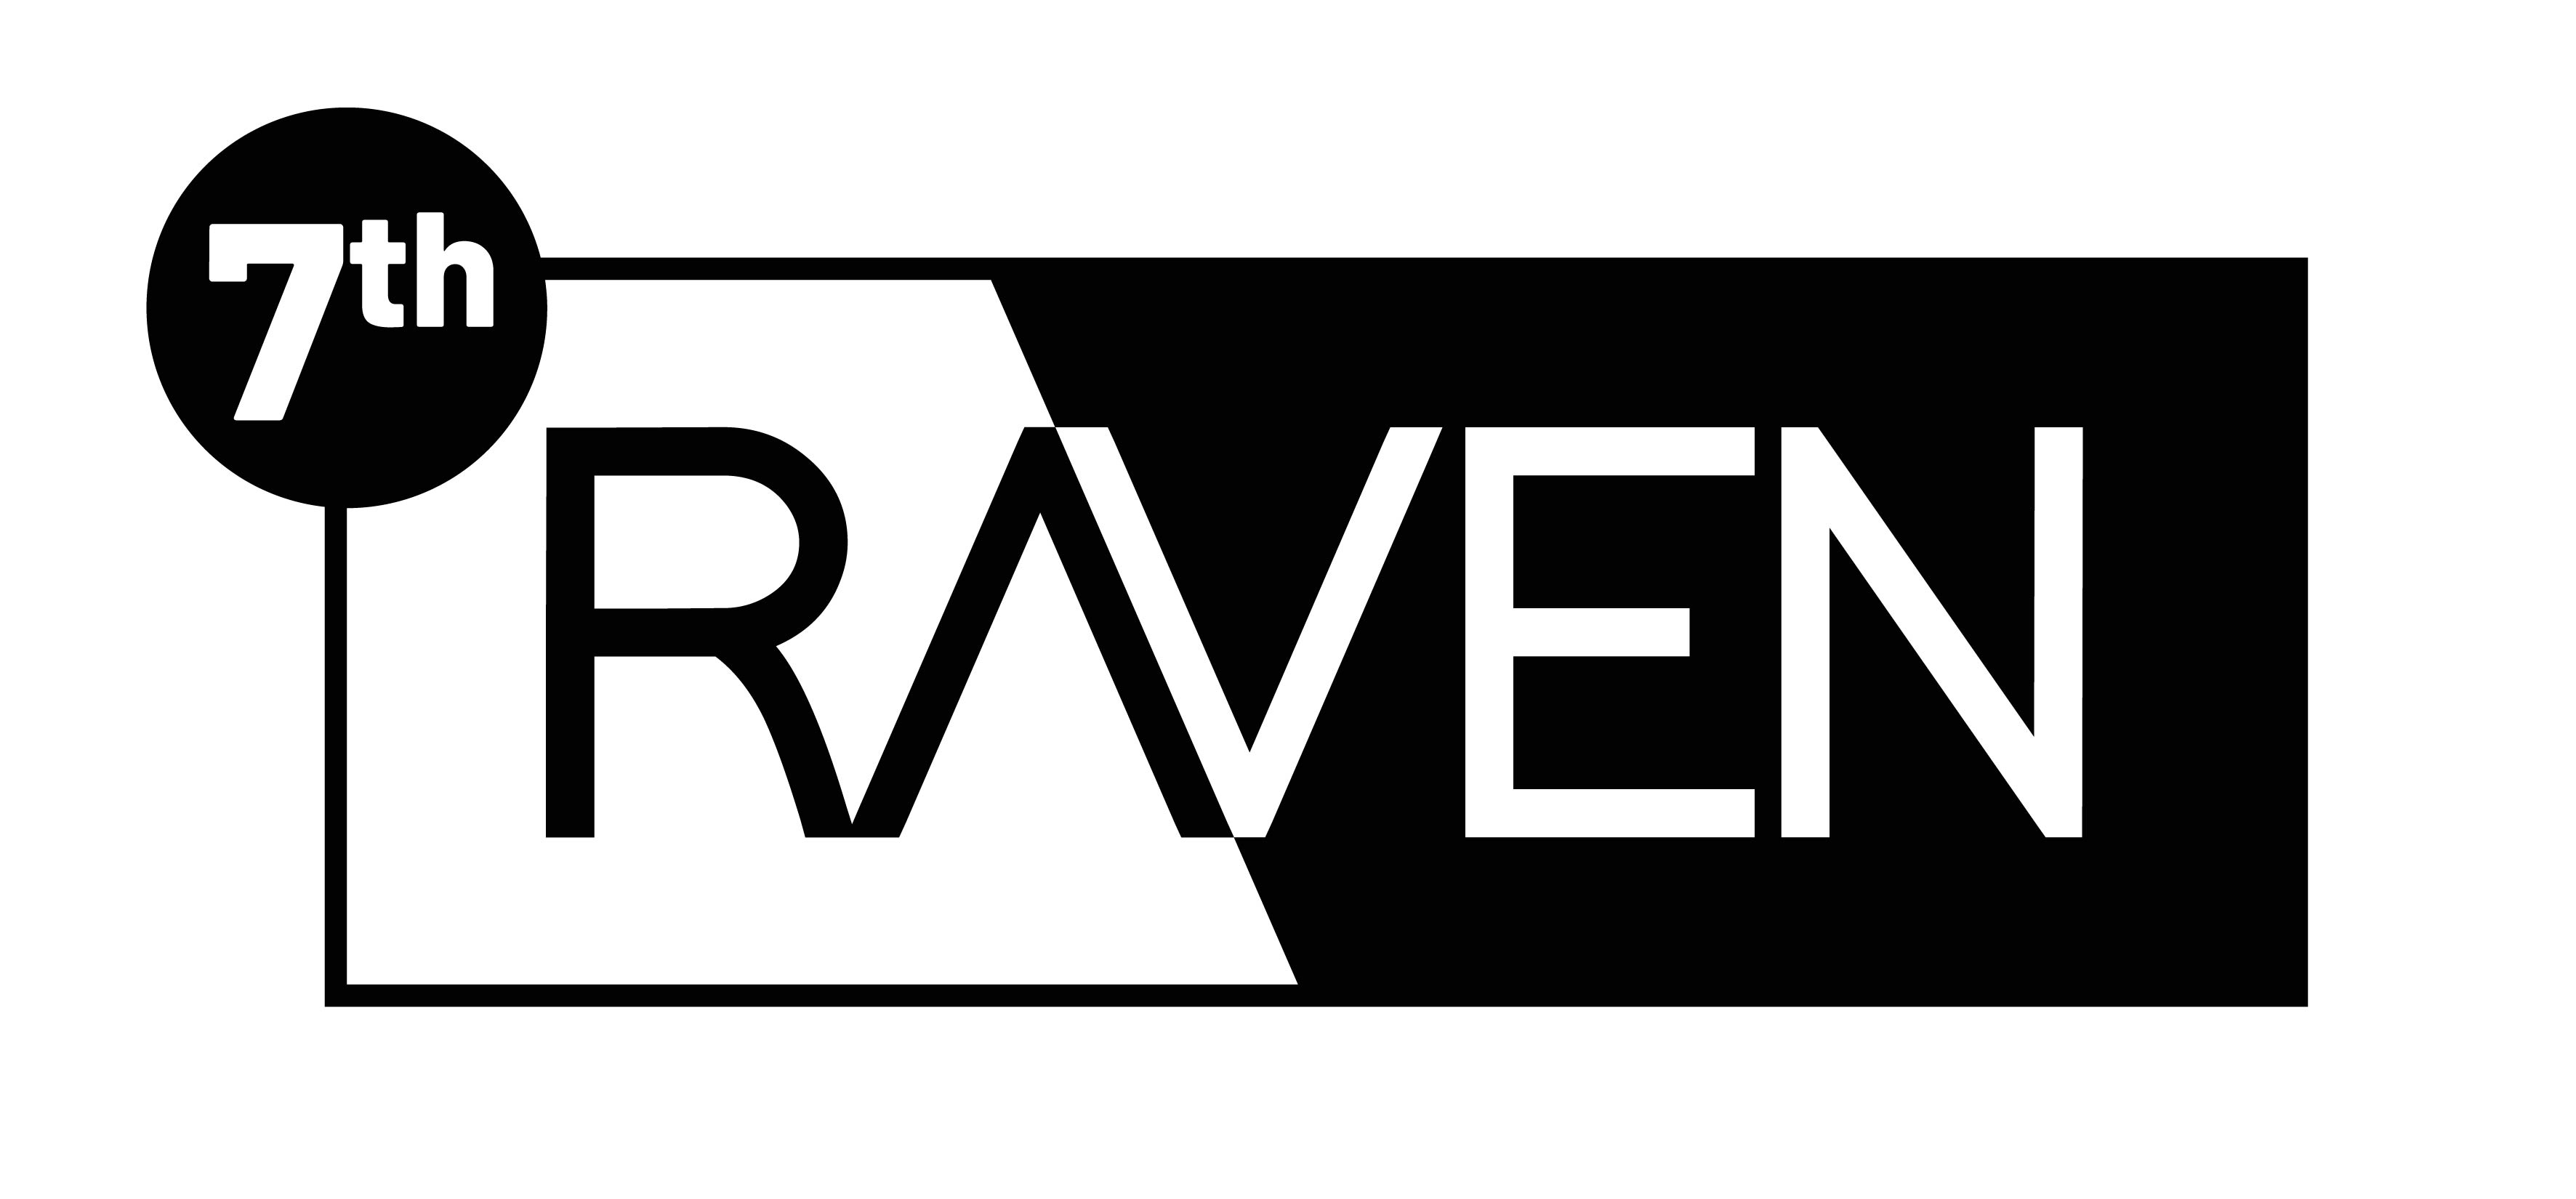 7th Raven logotype